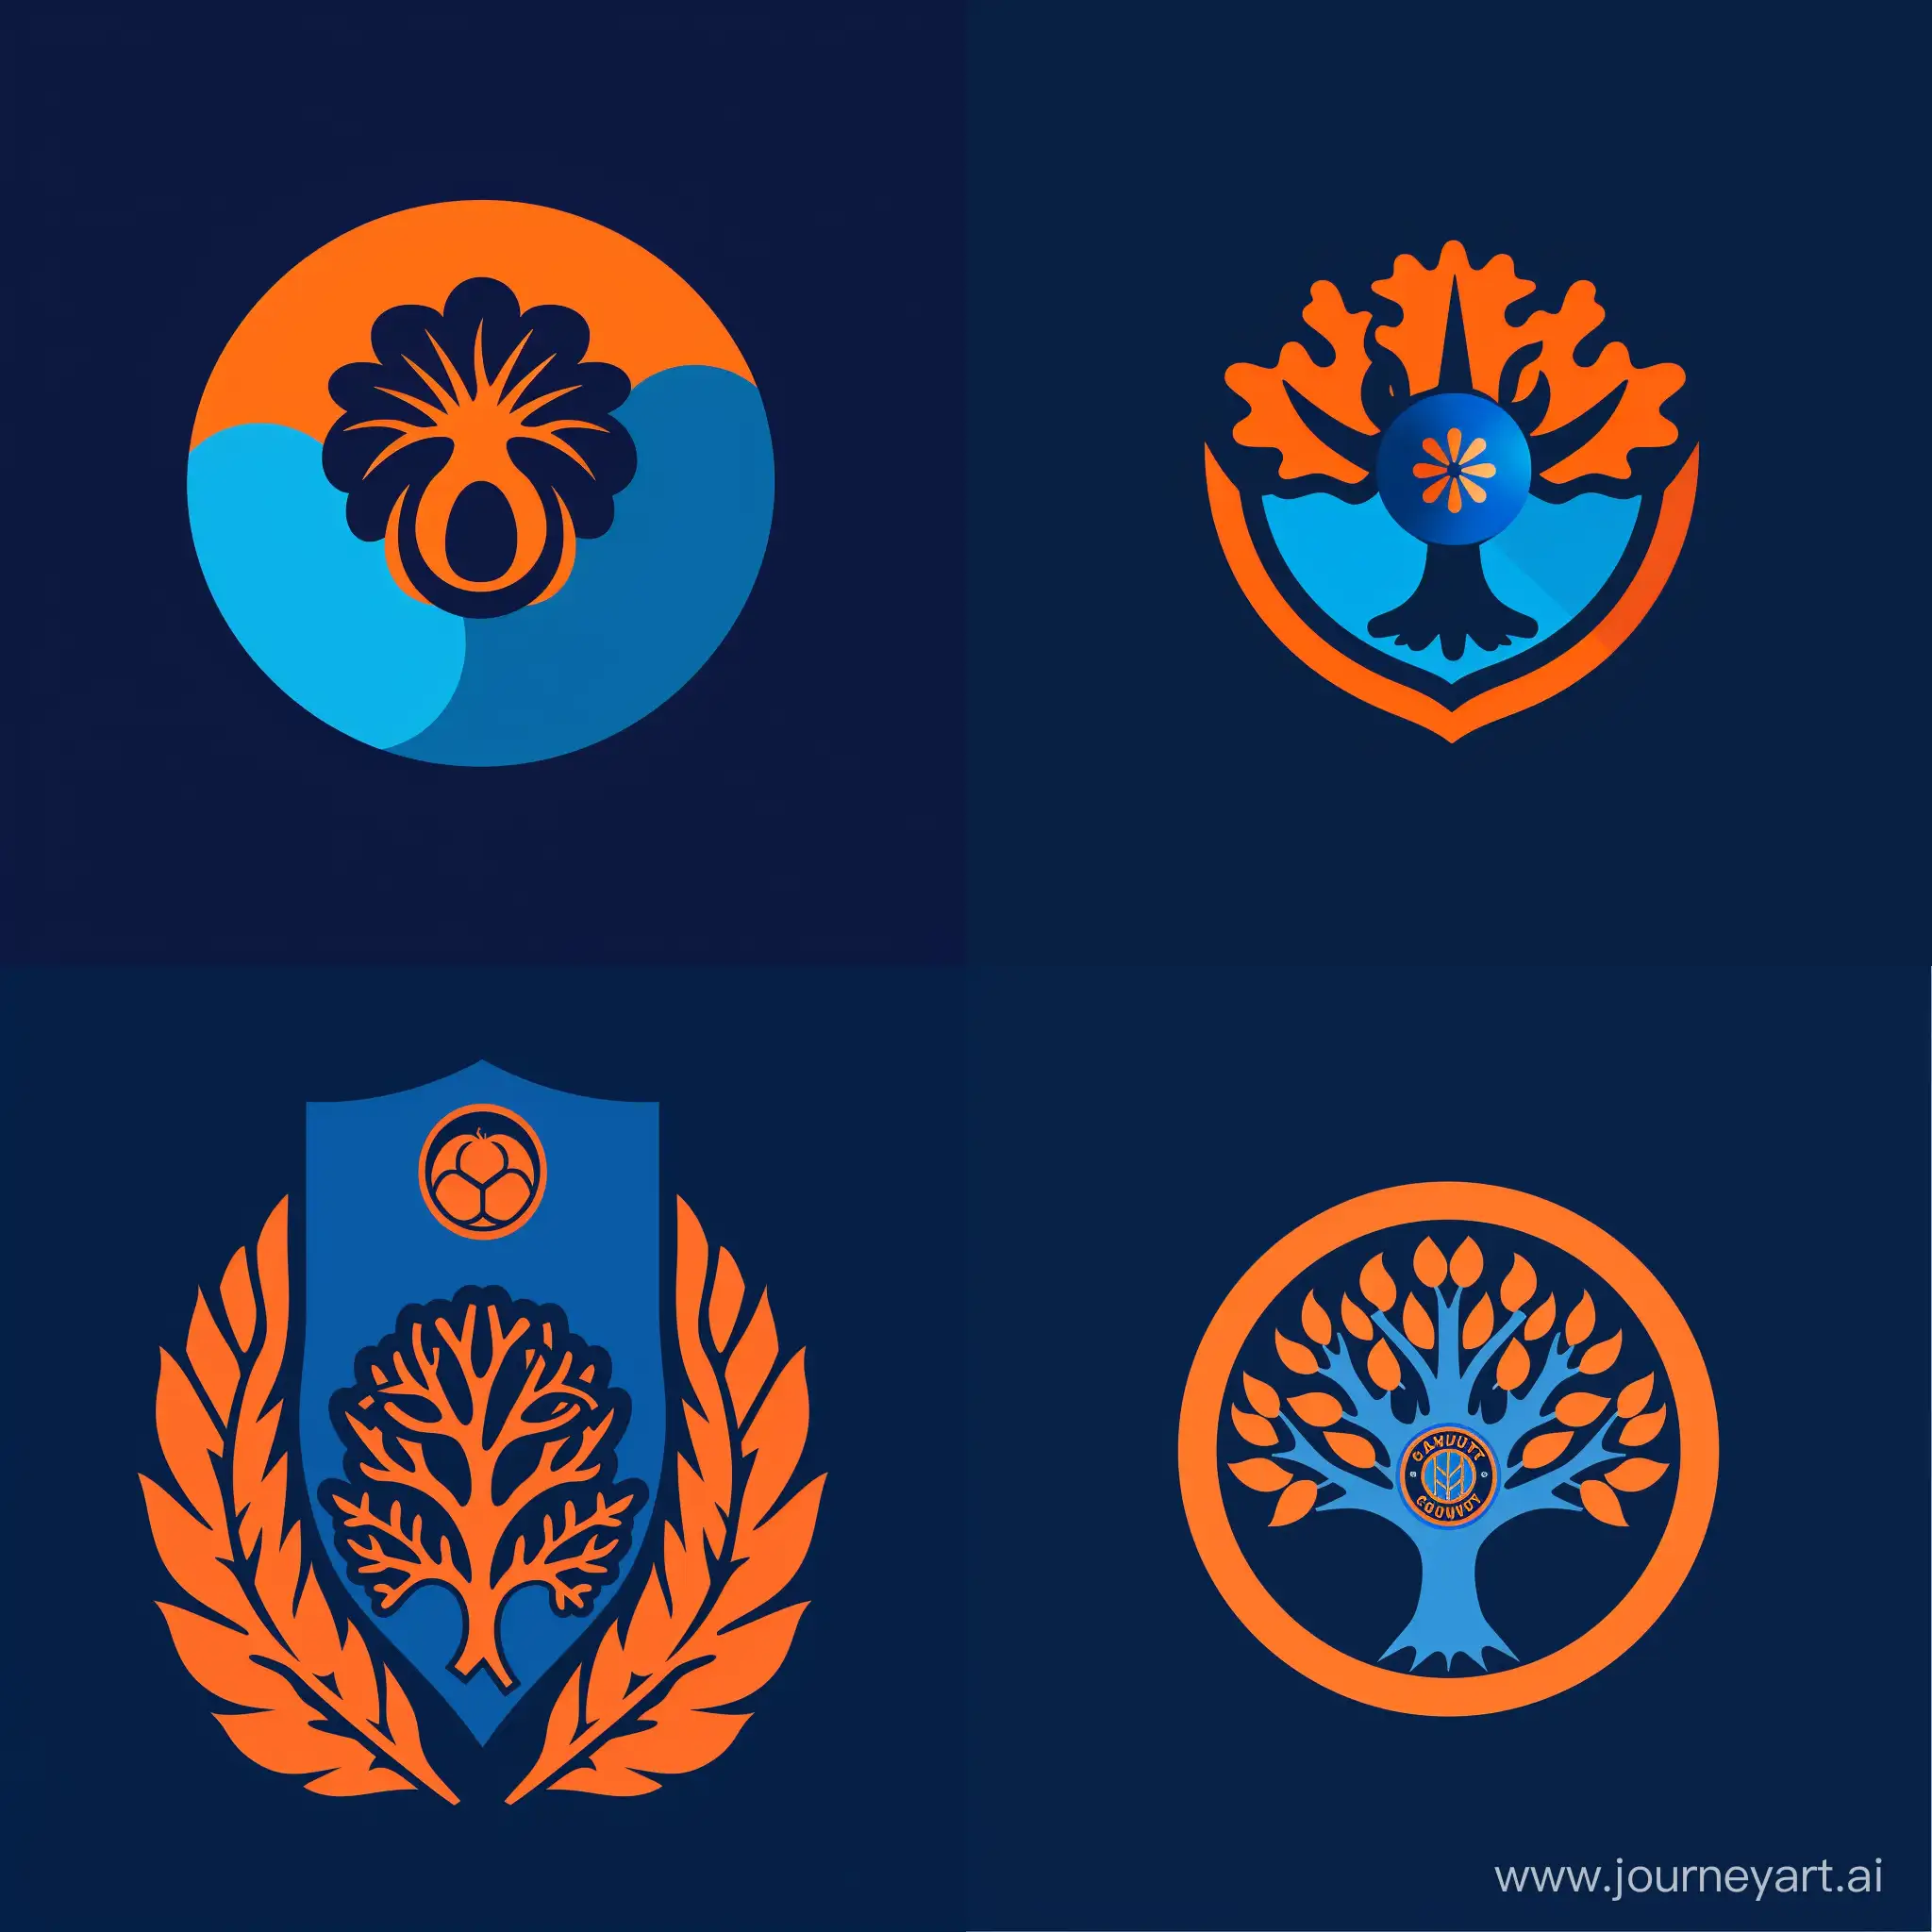 Dynamic-Blue-and-Orange-Soccer-Team-Logo-with-Majestic-Chestnut-Tree-Symbol